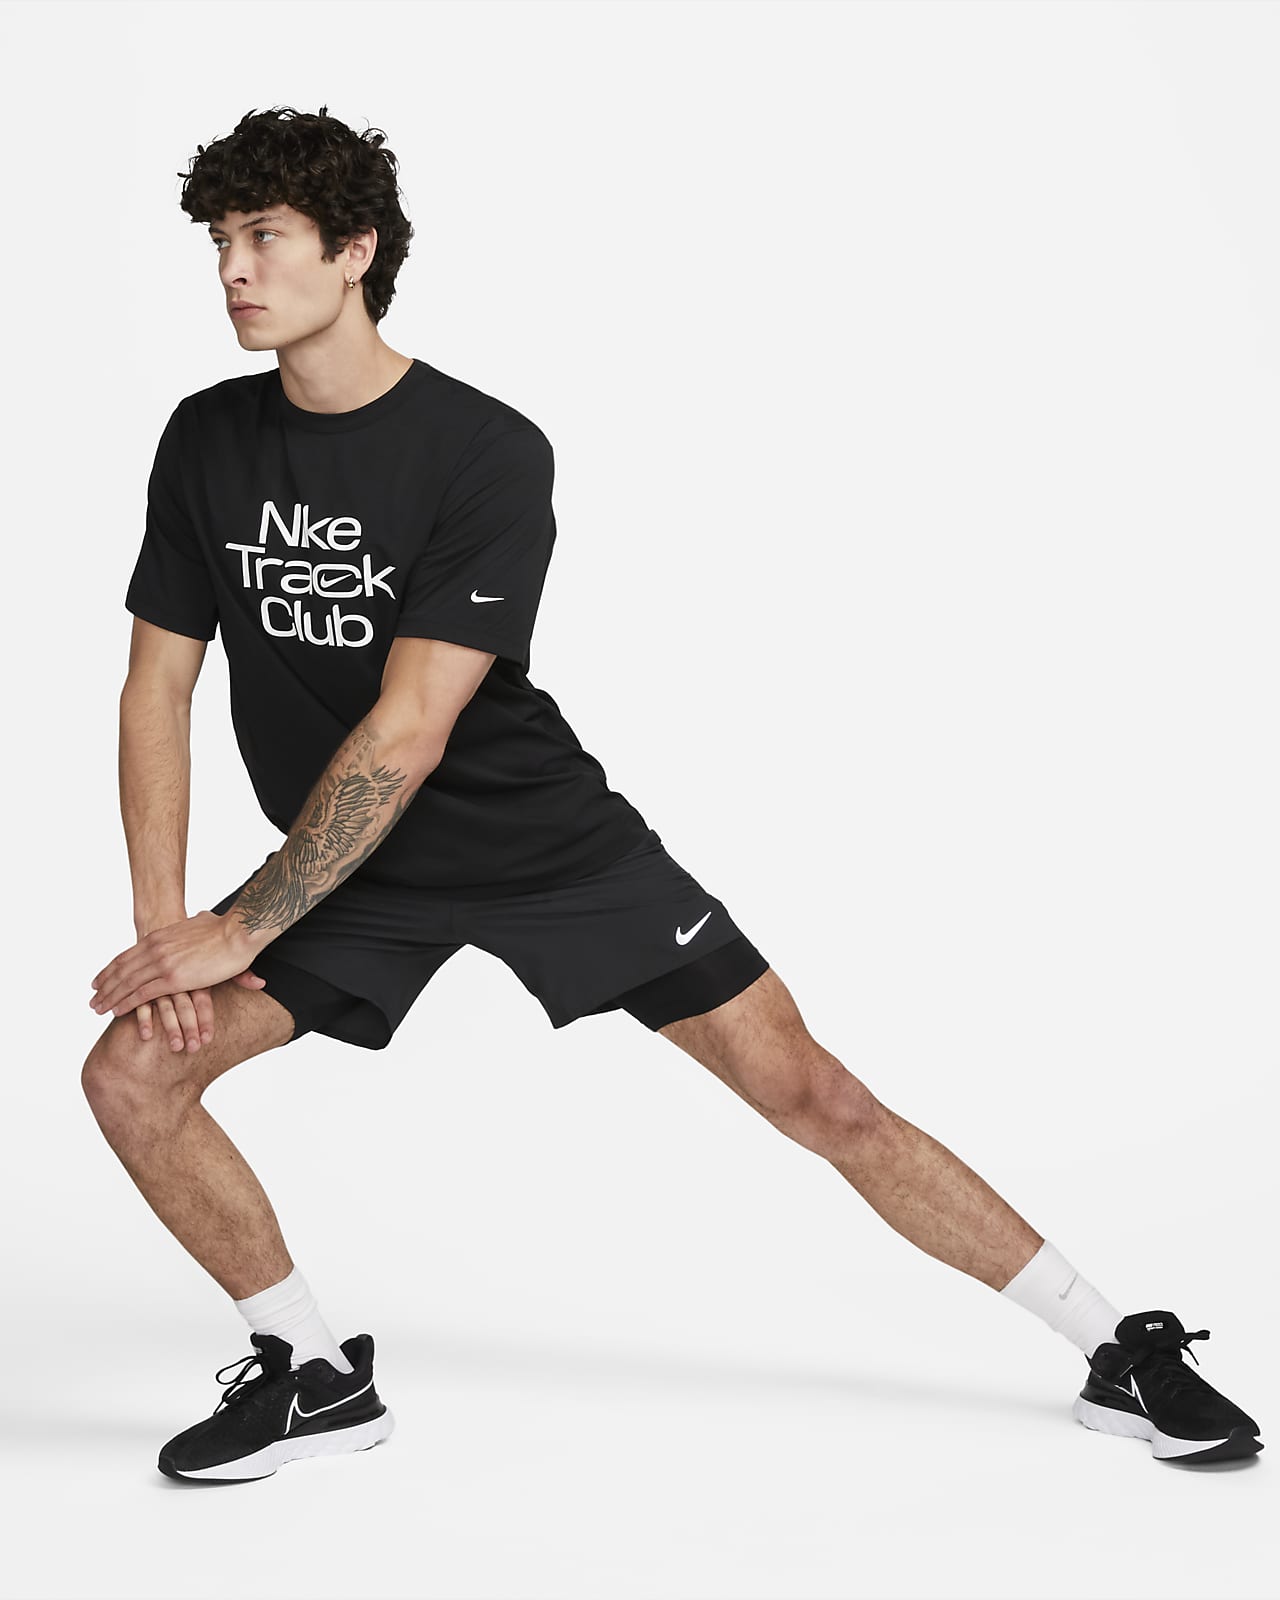 Nike Track Men's Short-Sleeve Running Top.